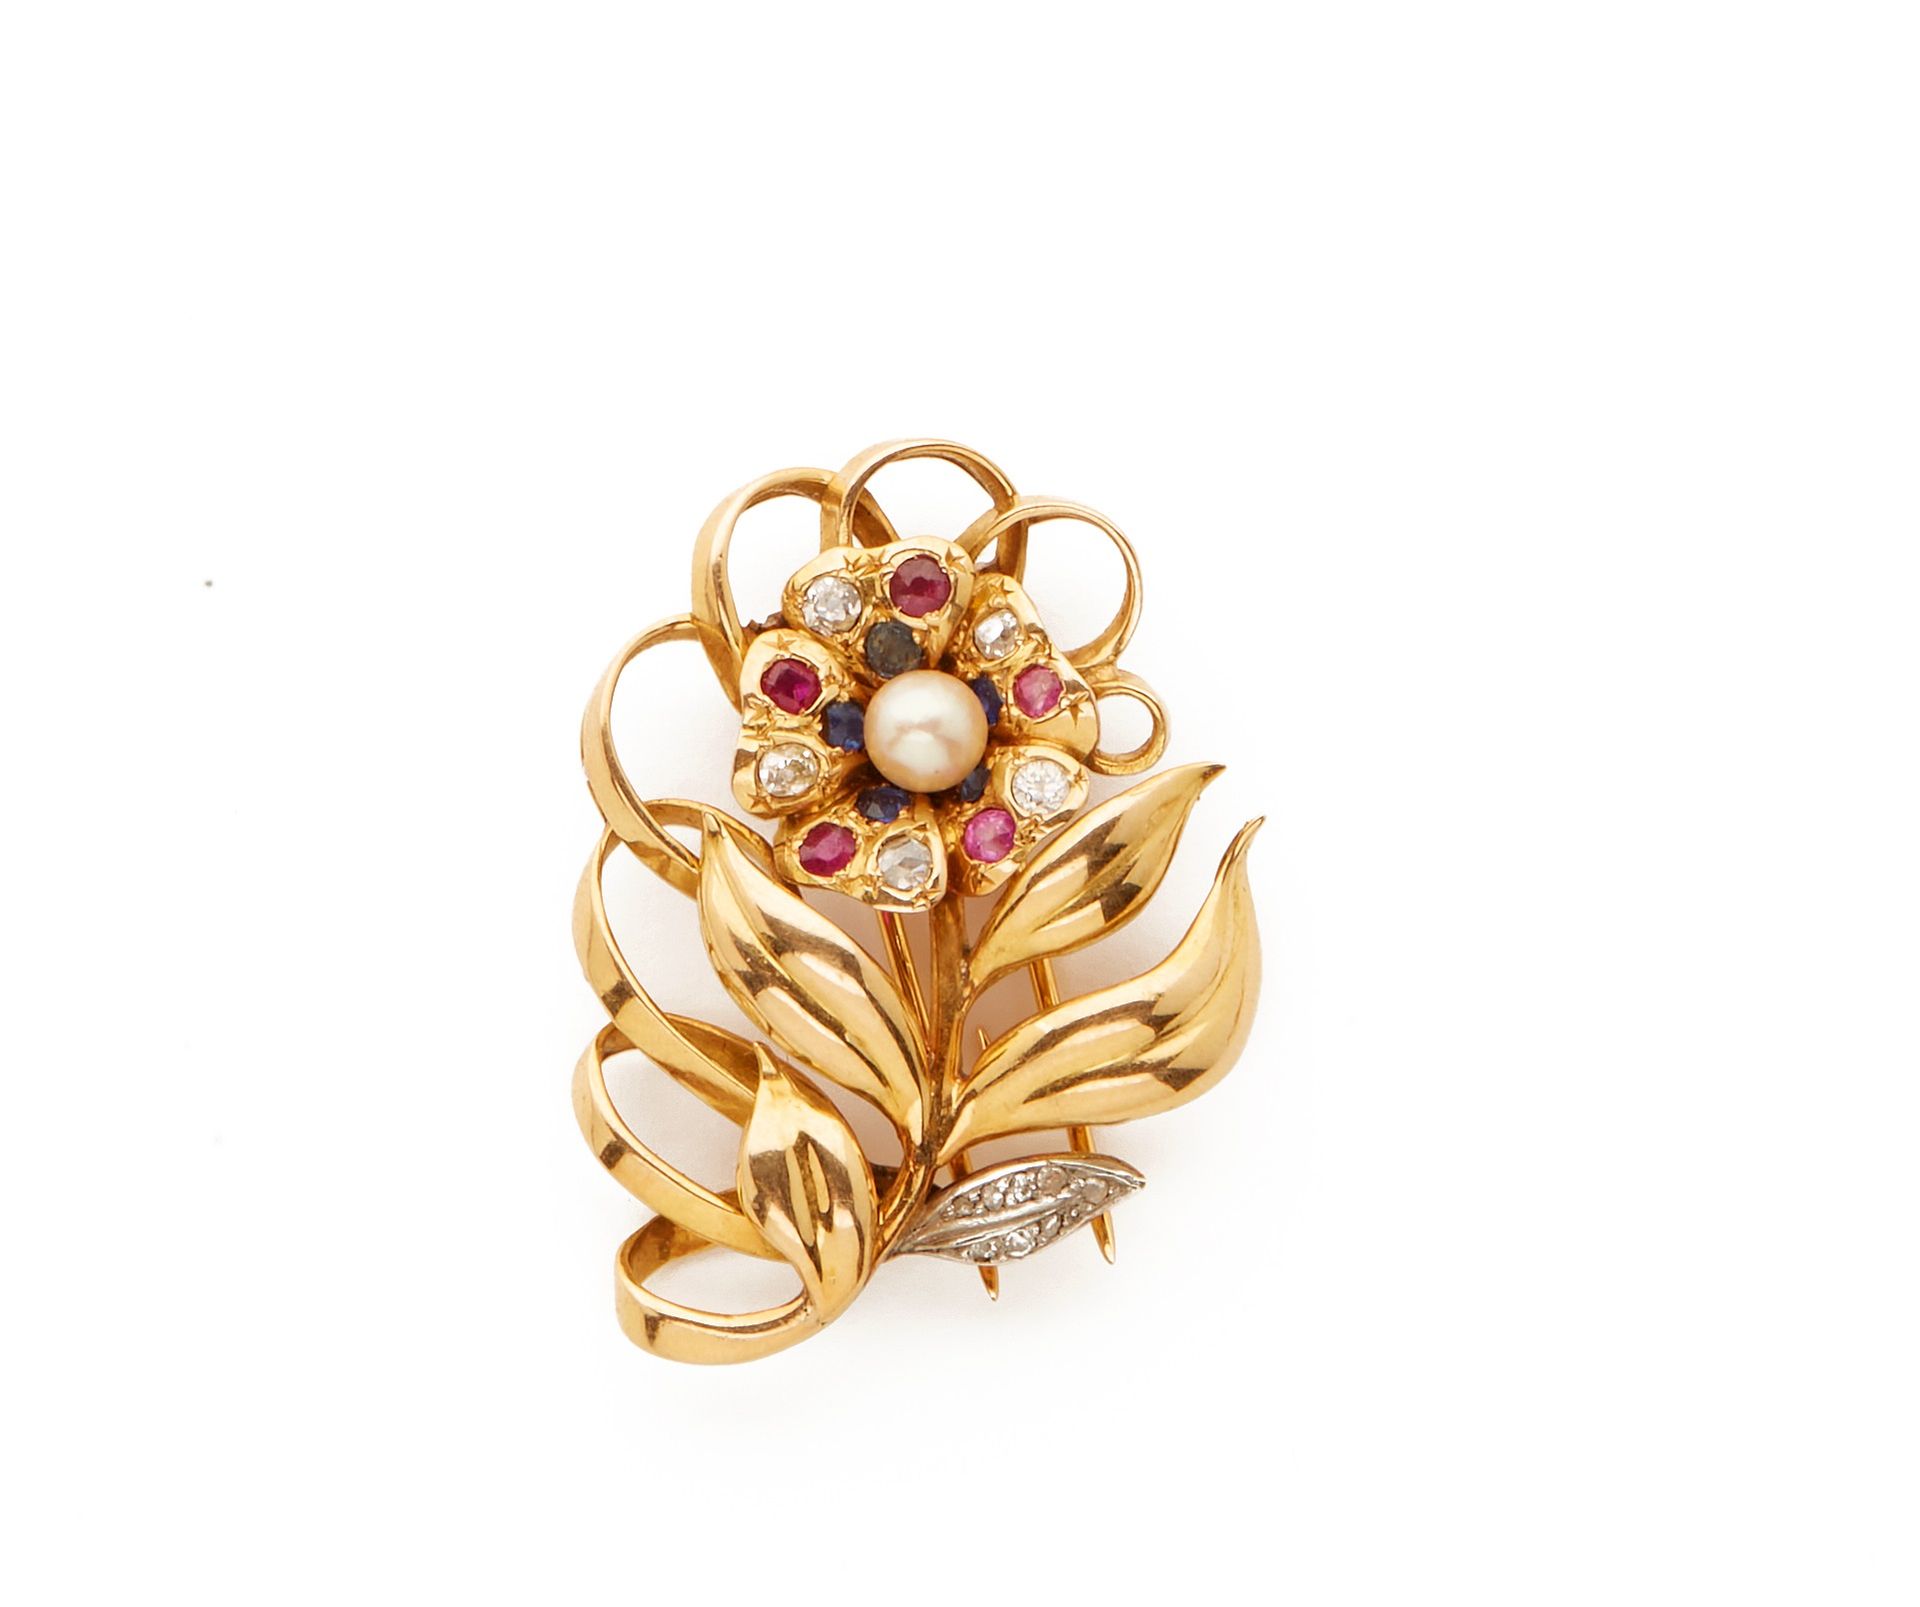 Null 18K黄金和白金领夹，特色是茎上的花朵，镶嵌着钻石、珍珠和石榴石 
毛重：17.5 g - 4.4 x 3.1 cm